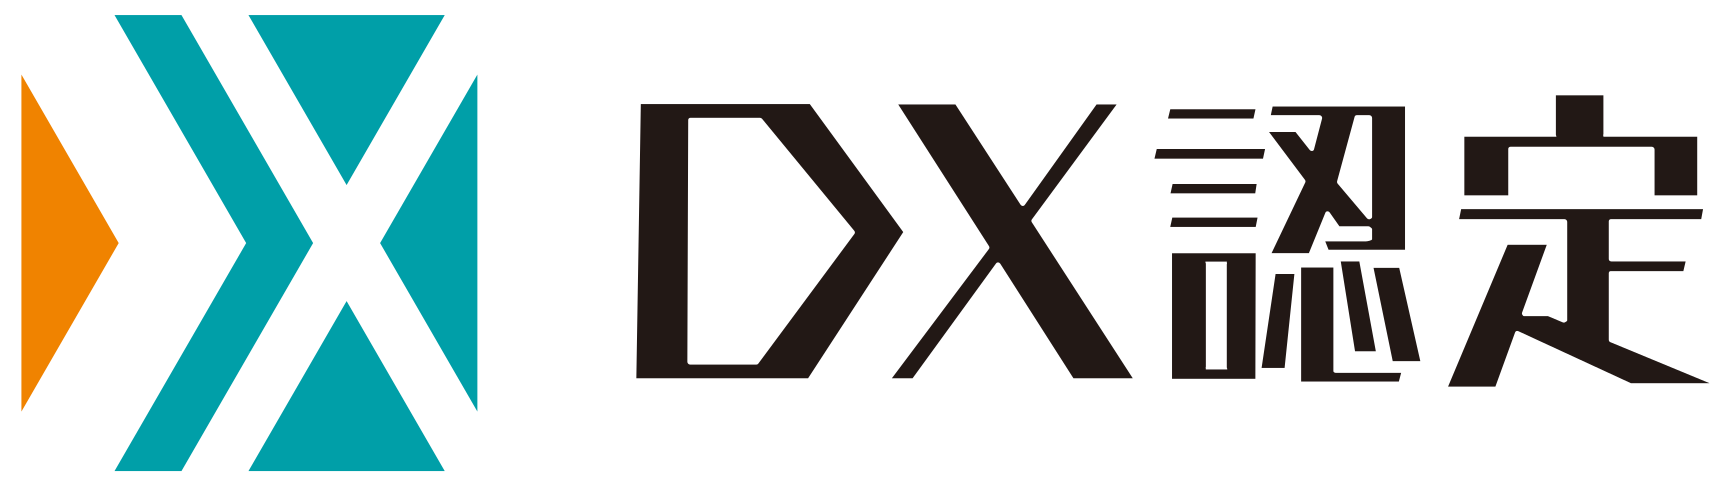 DX認定ロゴ_Trim.png